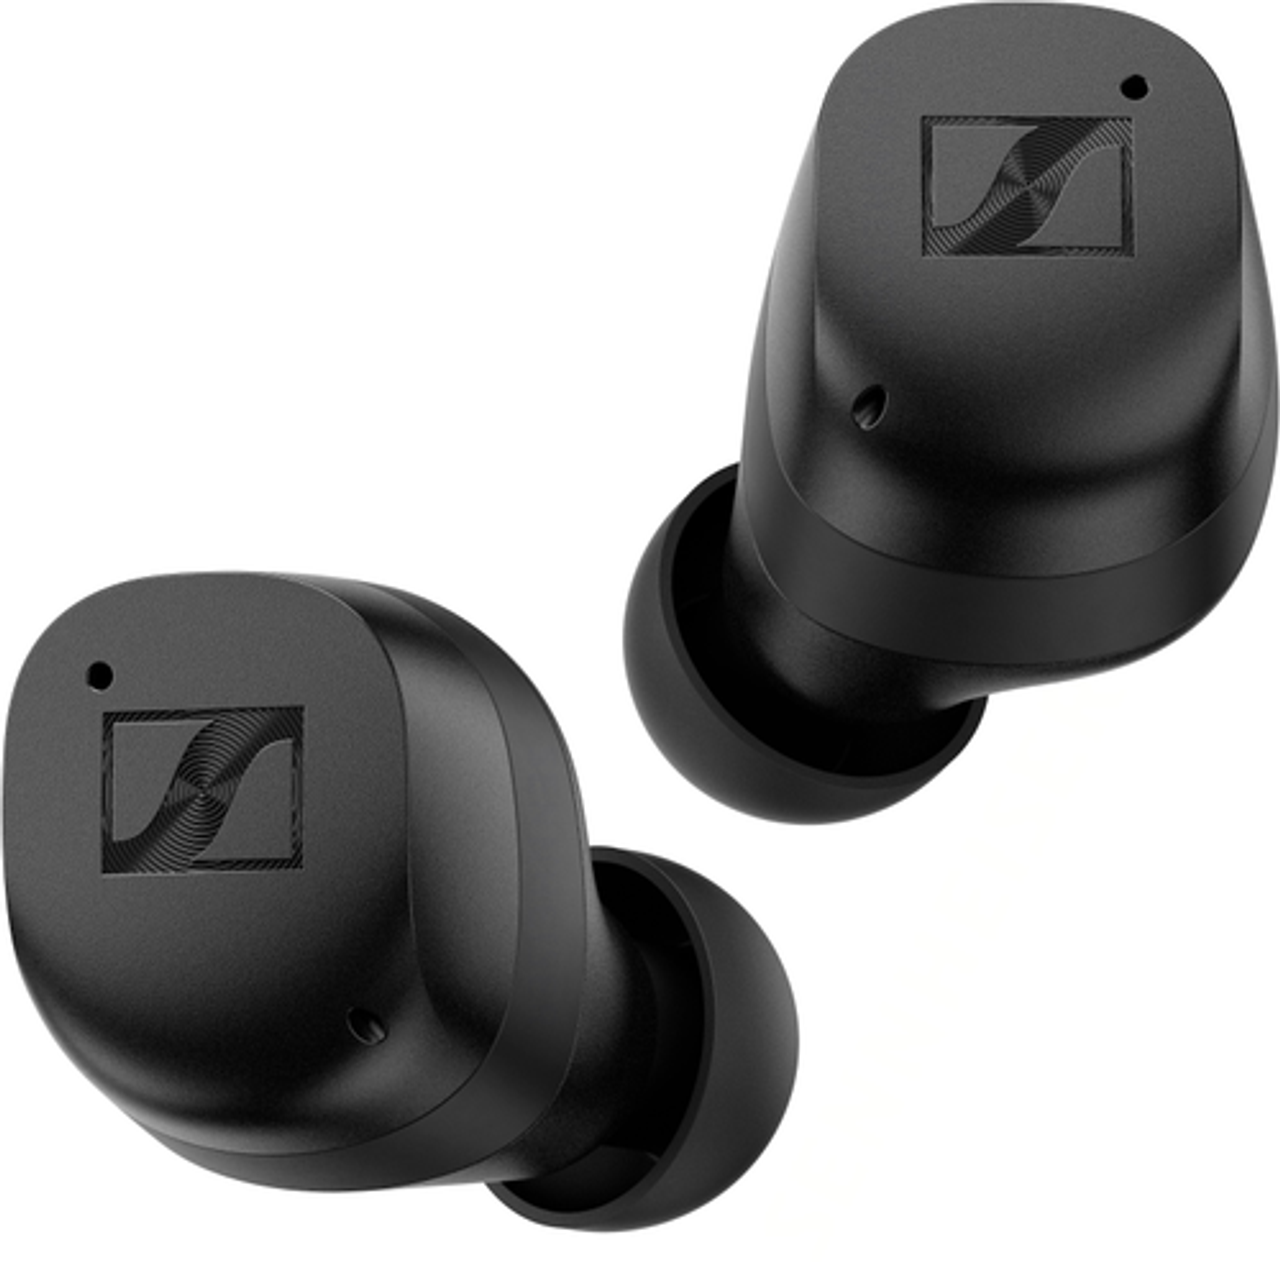 Sennheiser - Momentum 3 True Wireless Noise Cancelling In-Ear Headphones - Black